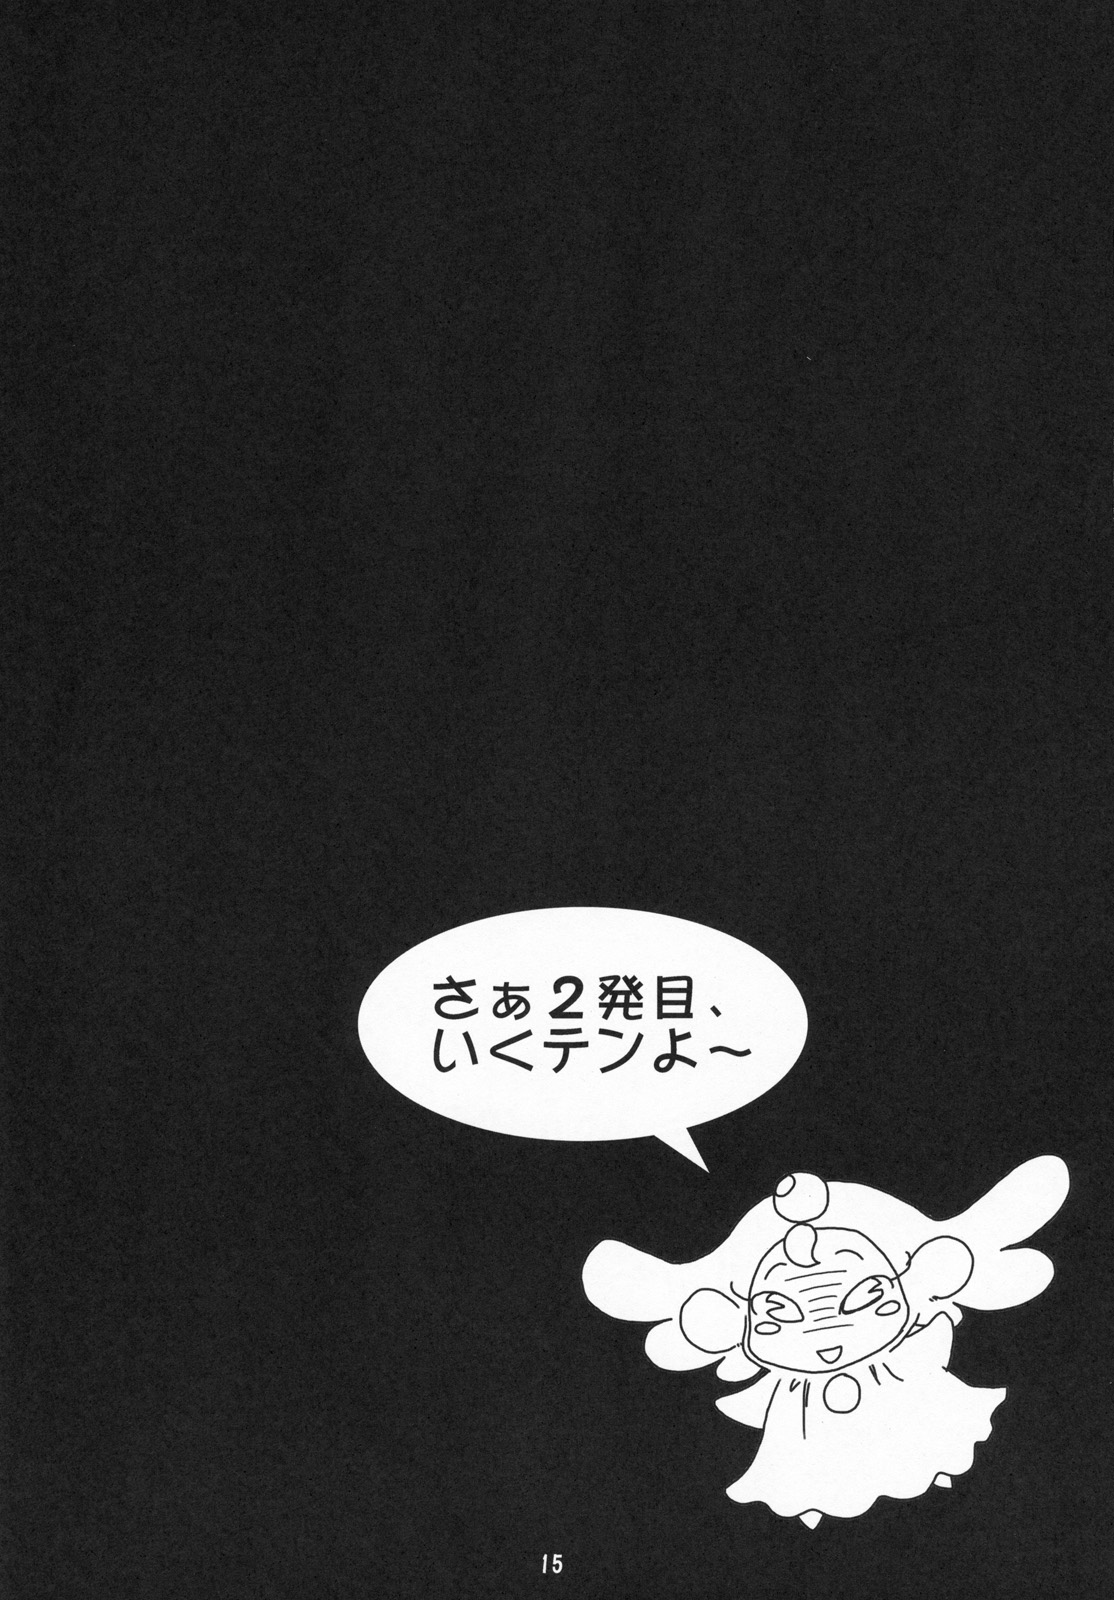 (C79) [Yokoshimanchi. &amp; NIGHT☆FUCKERS (Ash Yokoshima &amp; Mitsugi)] APF Angel Phantom Fuck!! (Kaitou Tenshi Twin Angel) (C79) (同人誌) [横島んち。&amp; 夜☆FUCKERS (Ash横島 &amp; ミツギ)] APF エンジェルファントムファック!! (快盗天使ツインエンジェル)